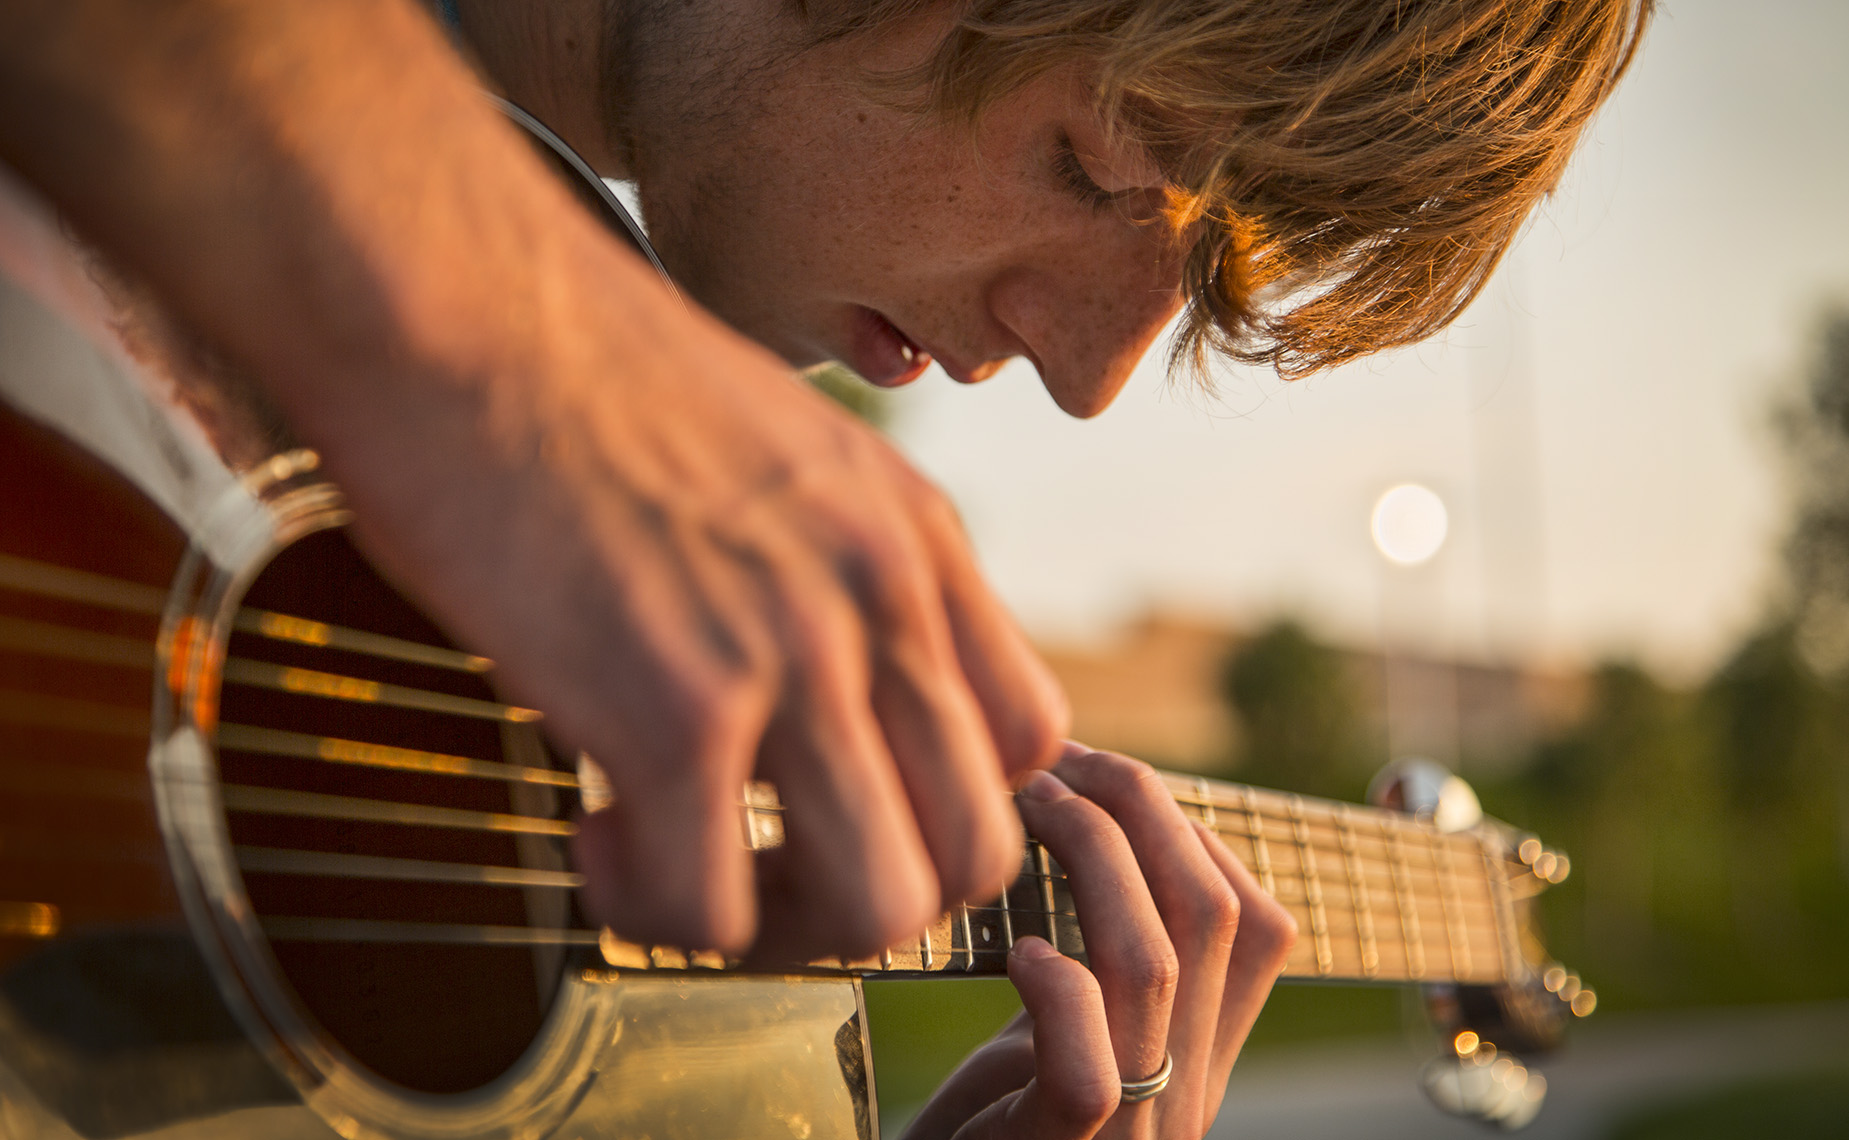 Park musician plays guitar in golden light by Scott Dobry Pictures photographer in Omaha, Nebraska